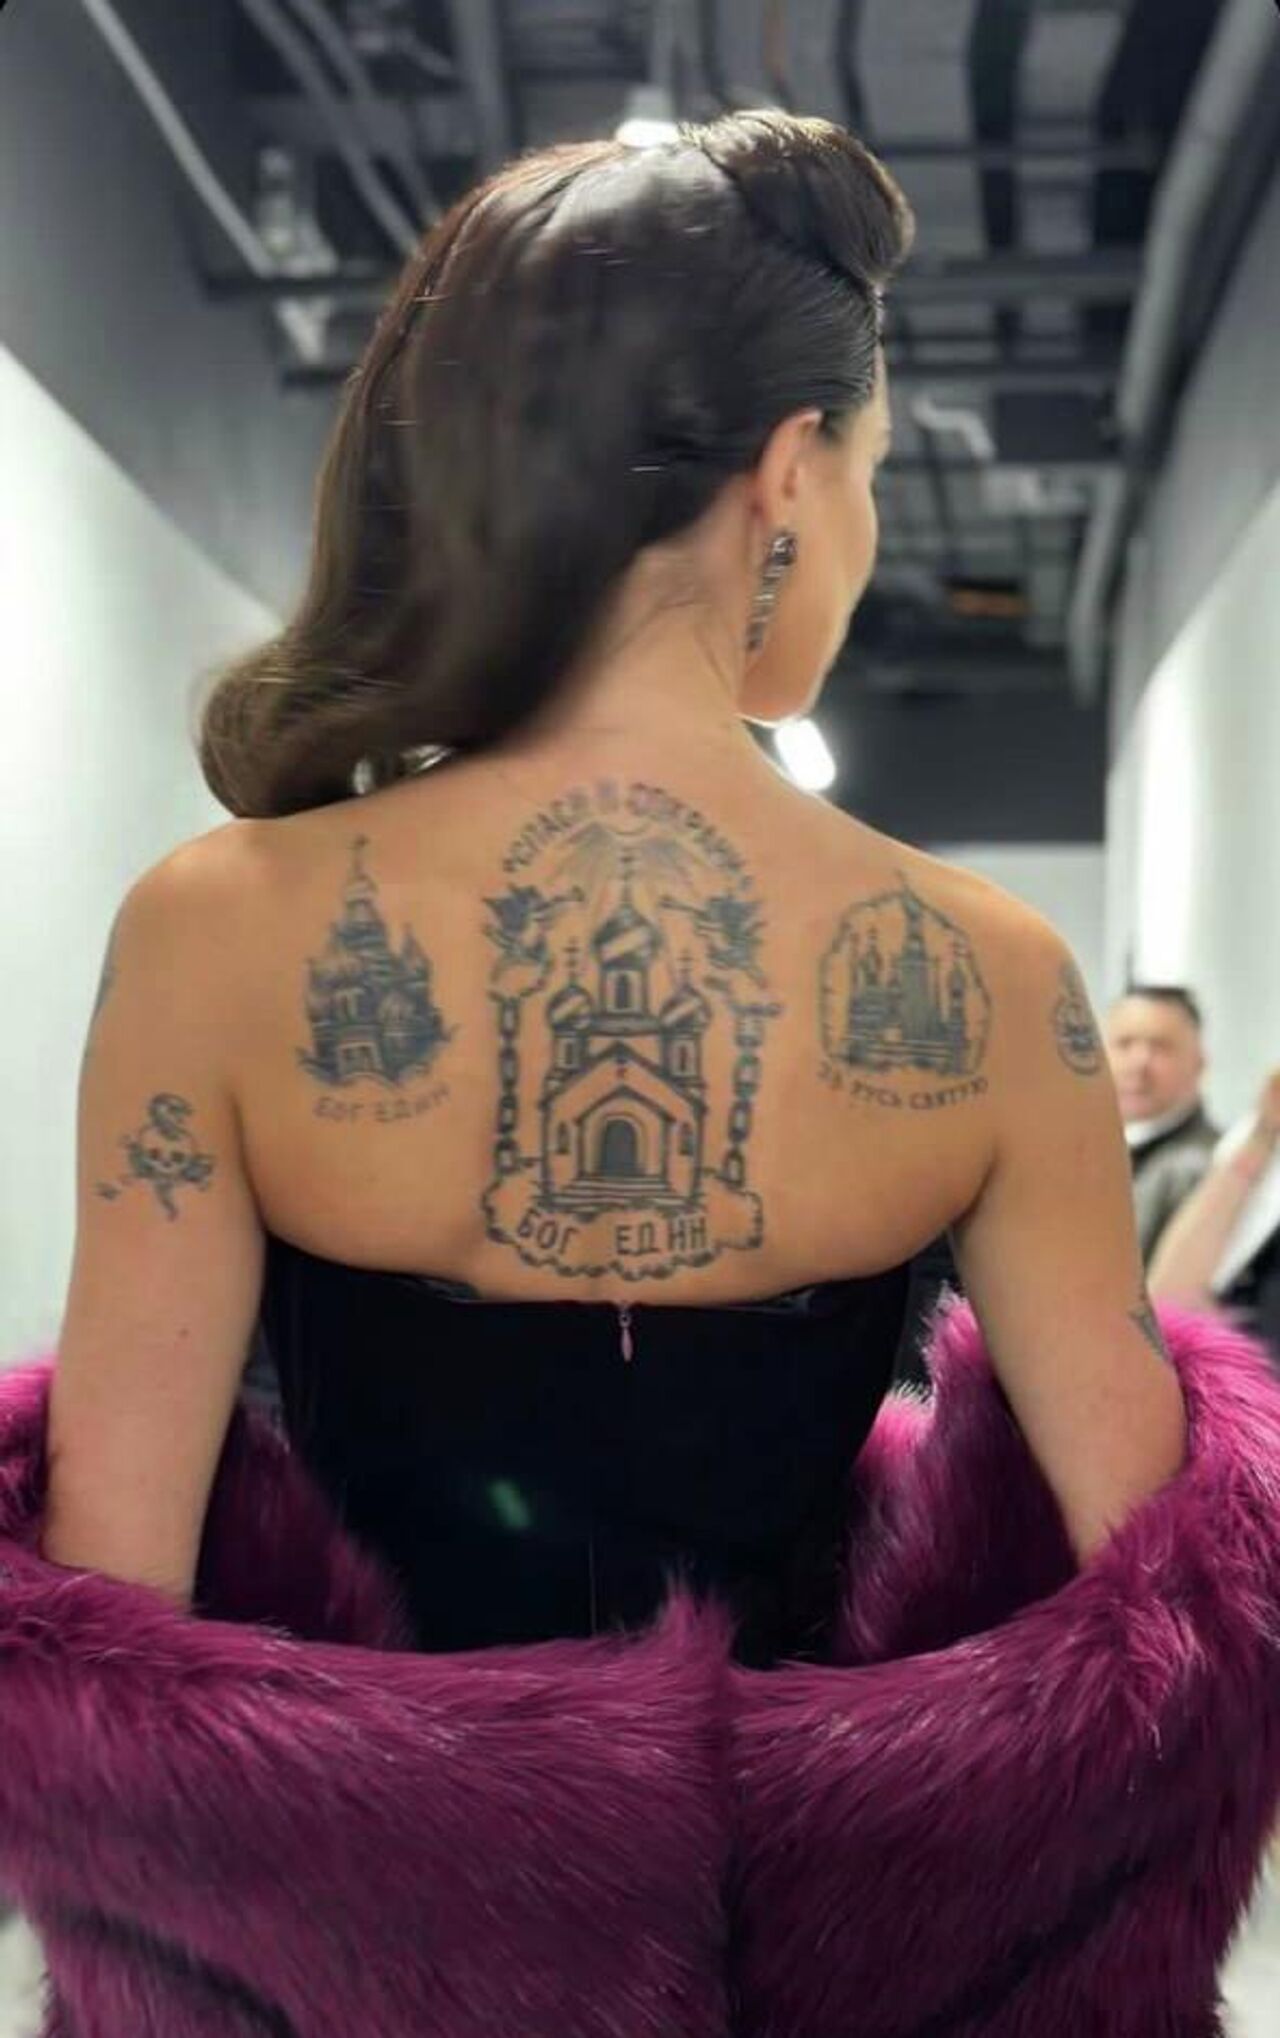 татуировка купола на спине